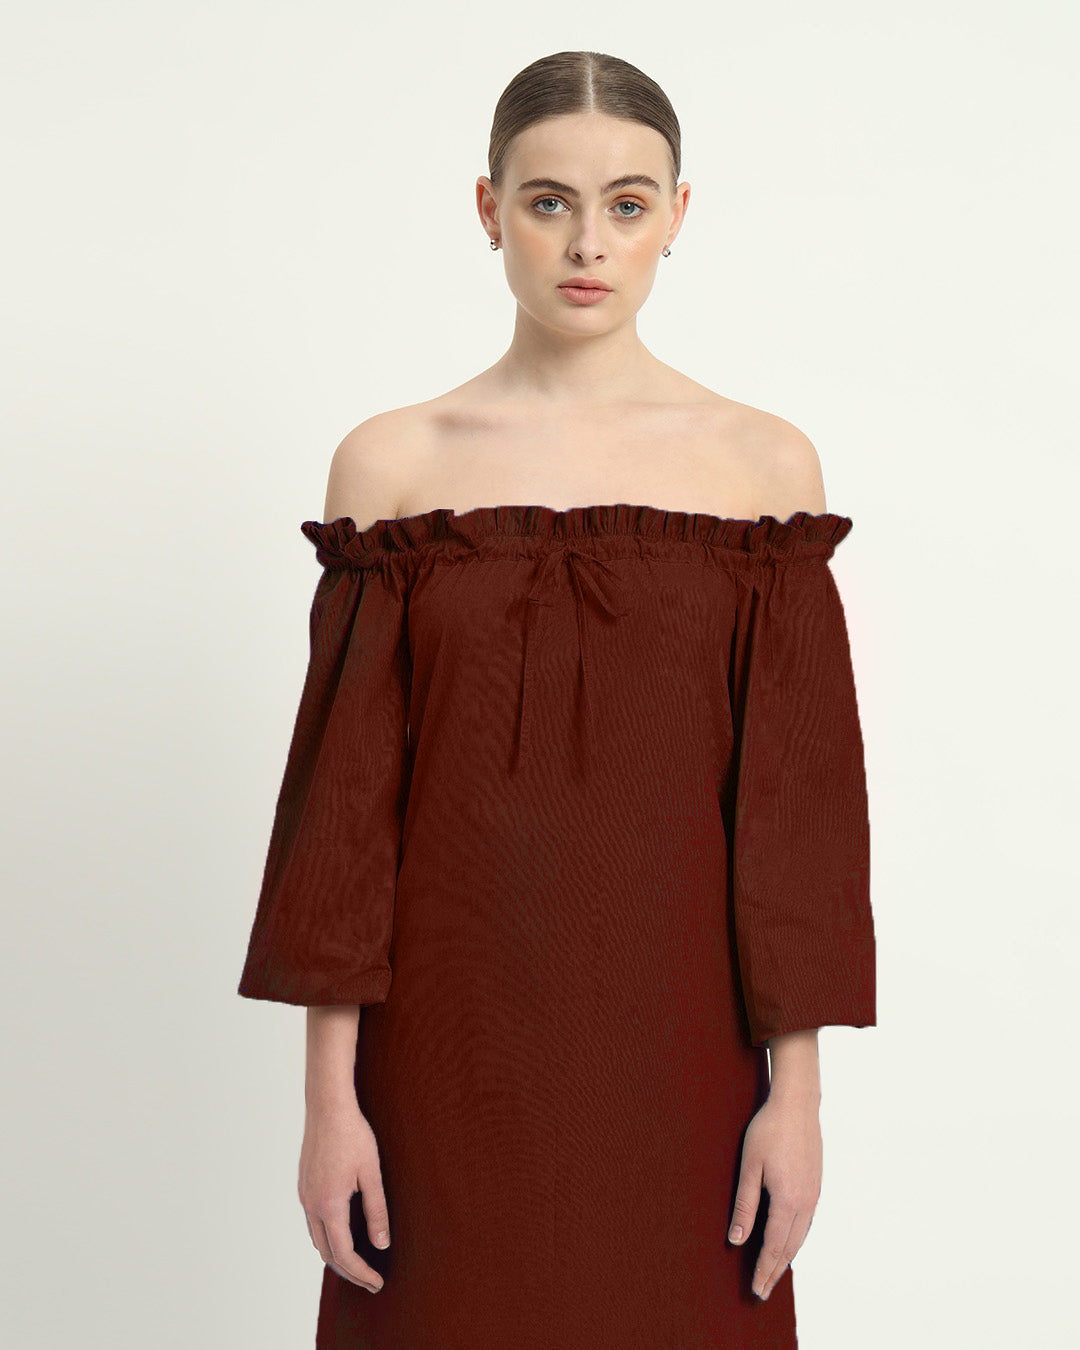 The Carlisle Rouge Cotton Dress